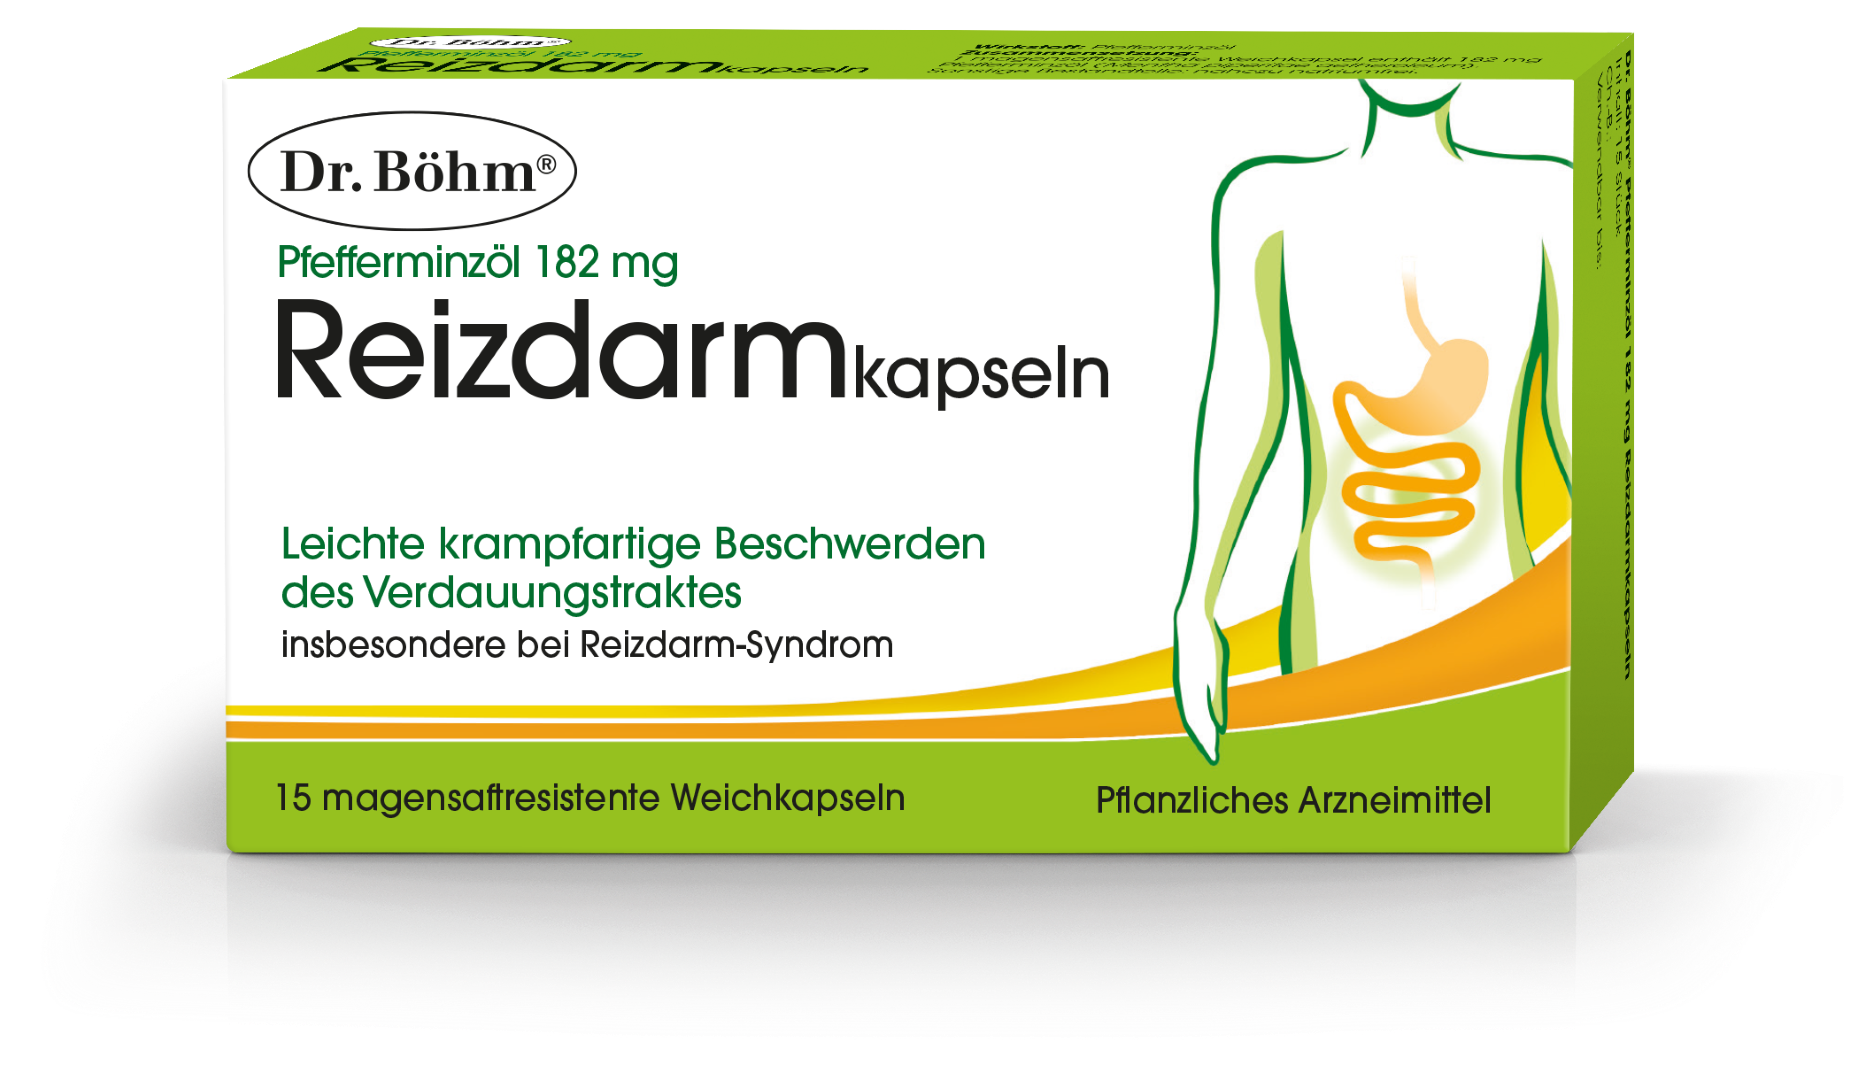 Abbildung Dr. Böhm Pfefferminzöl 182 mg Reizdarmkapseln